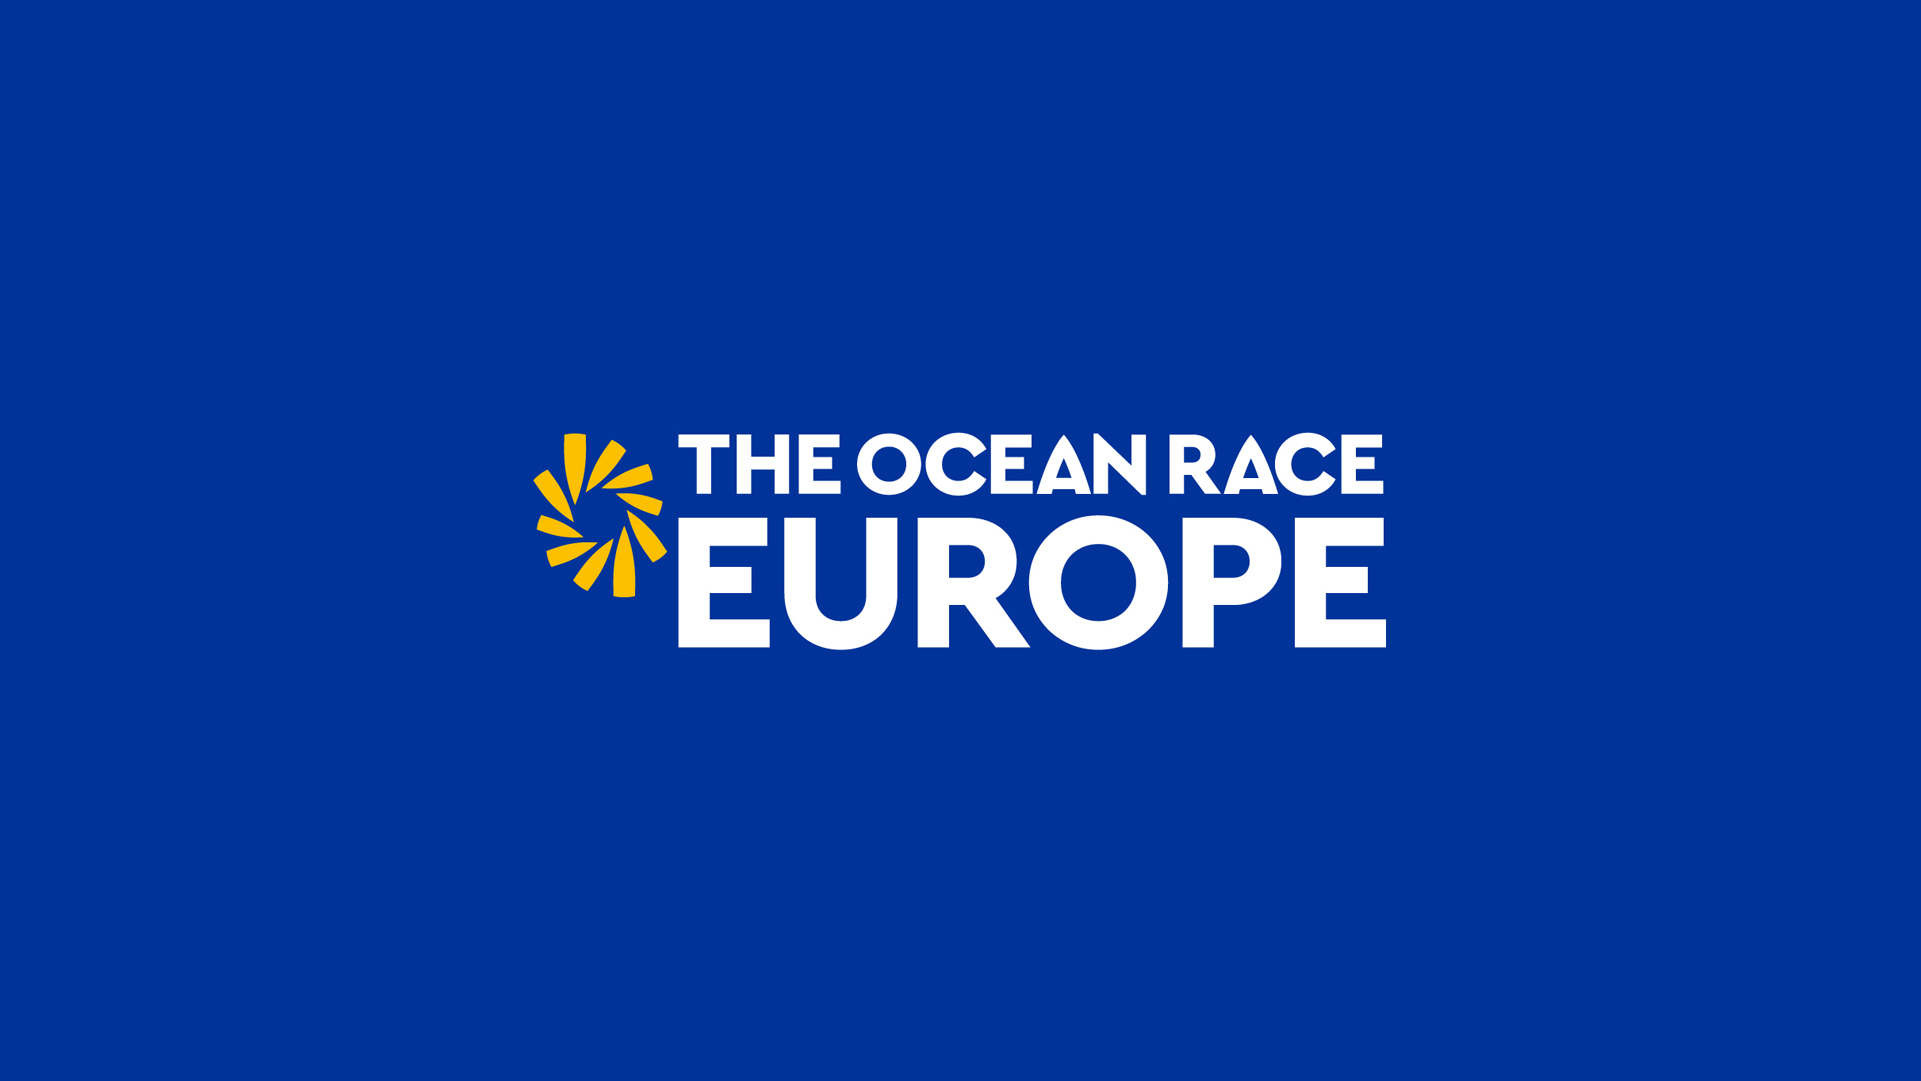 THE OCEAN RACE EUROPEAN LOGO